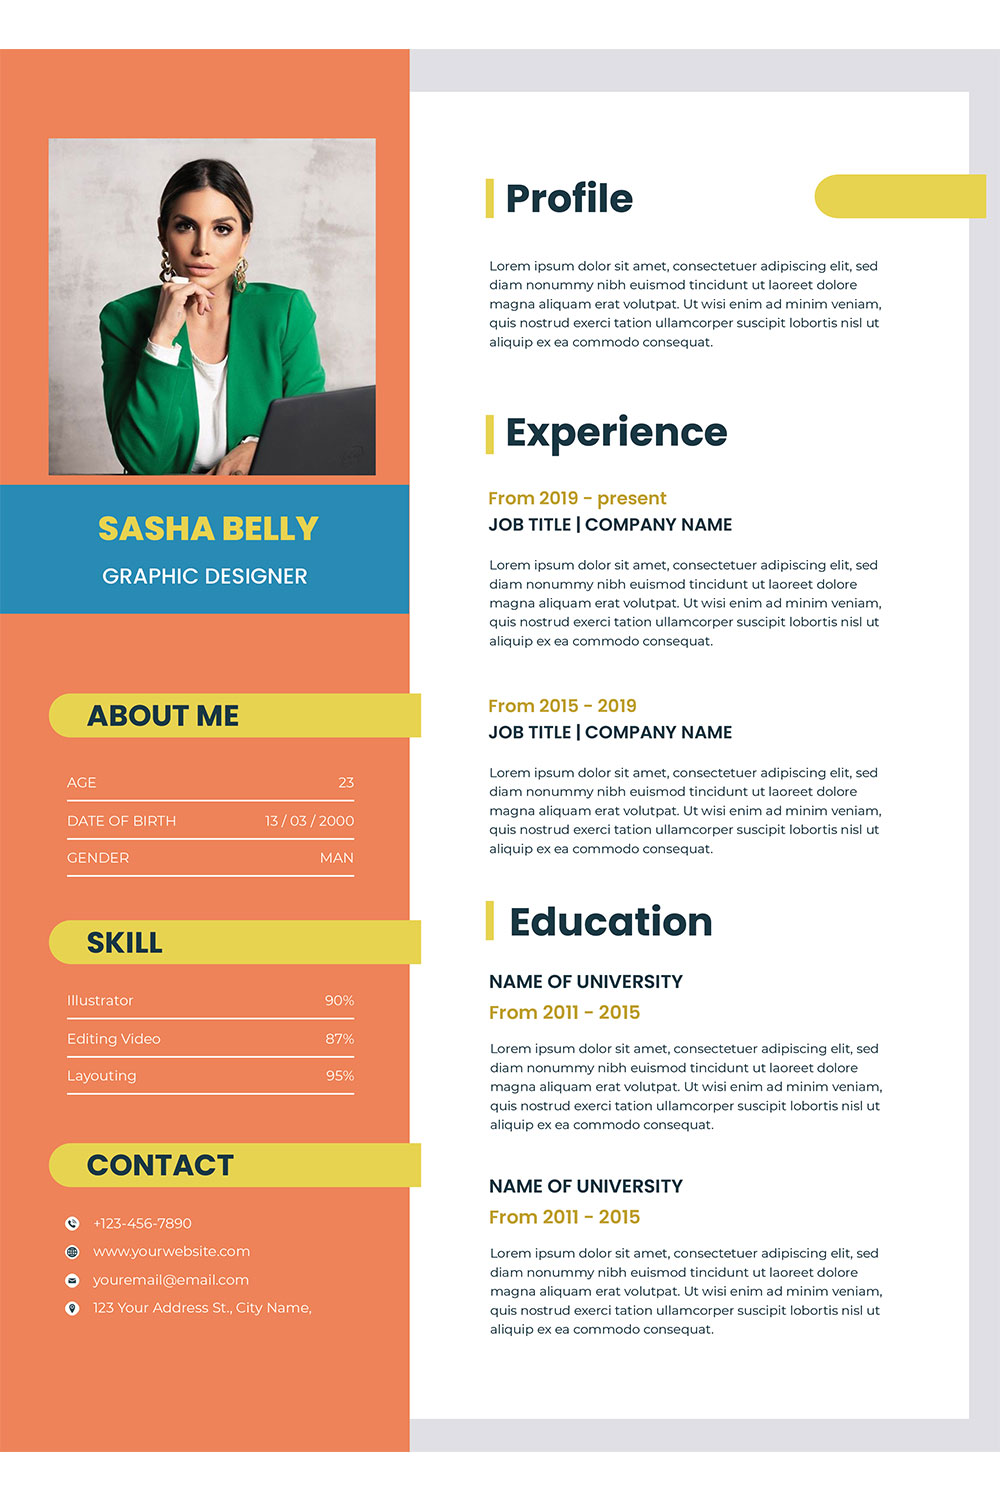 Elegant Resume / CV Template pinterest preview image.